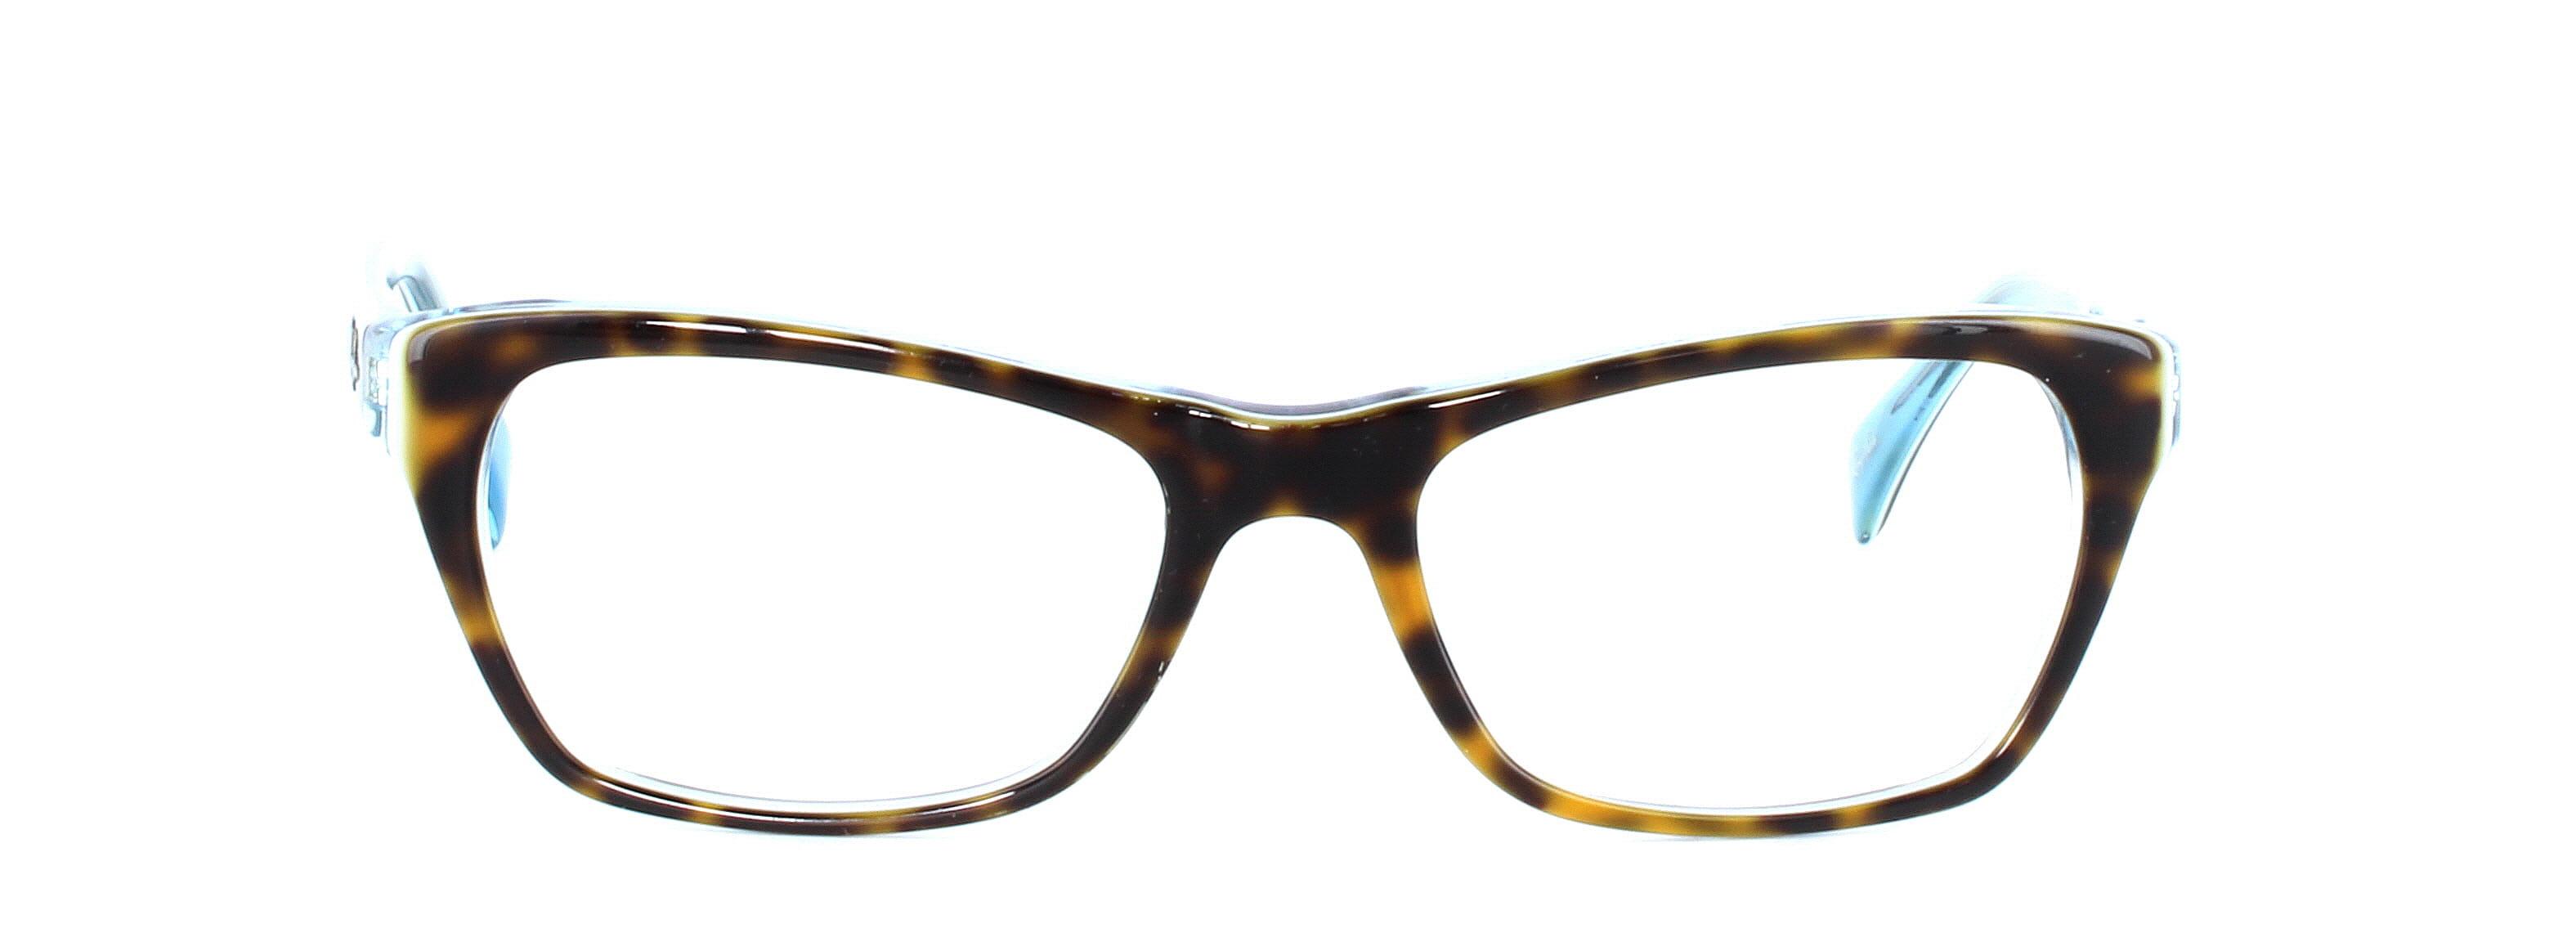 Ray Ban 5298 Tortoise | Cheap Glasses Online | Glasses2you